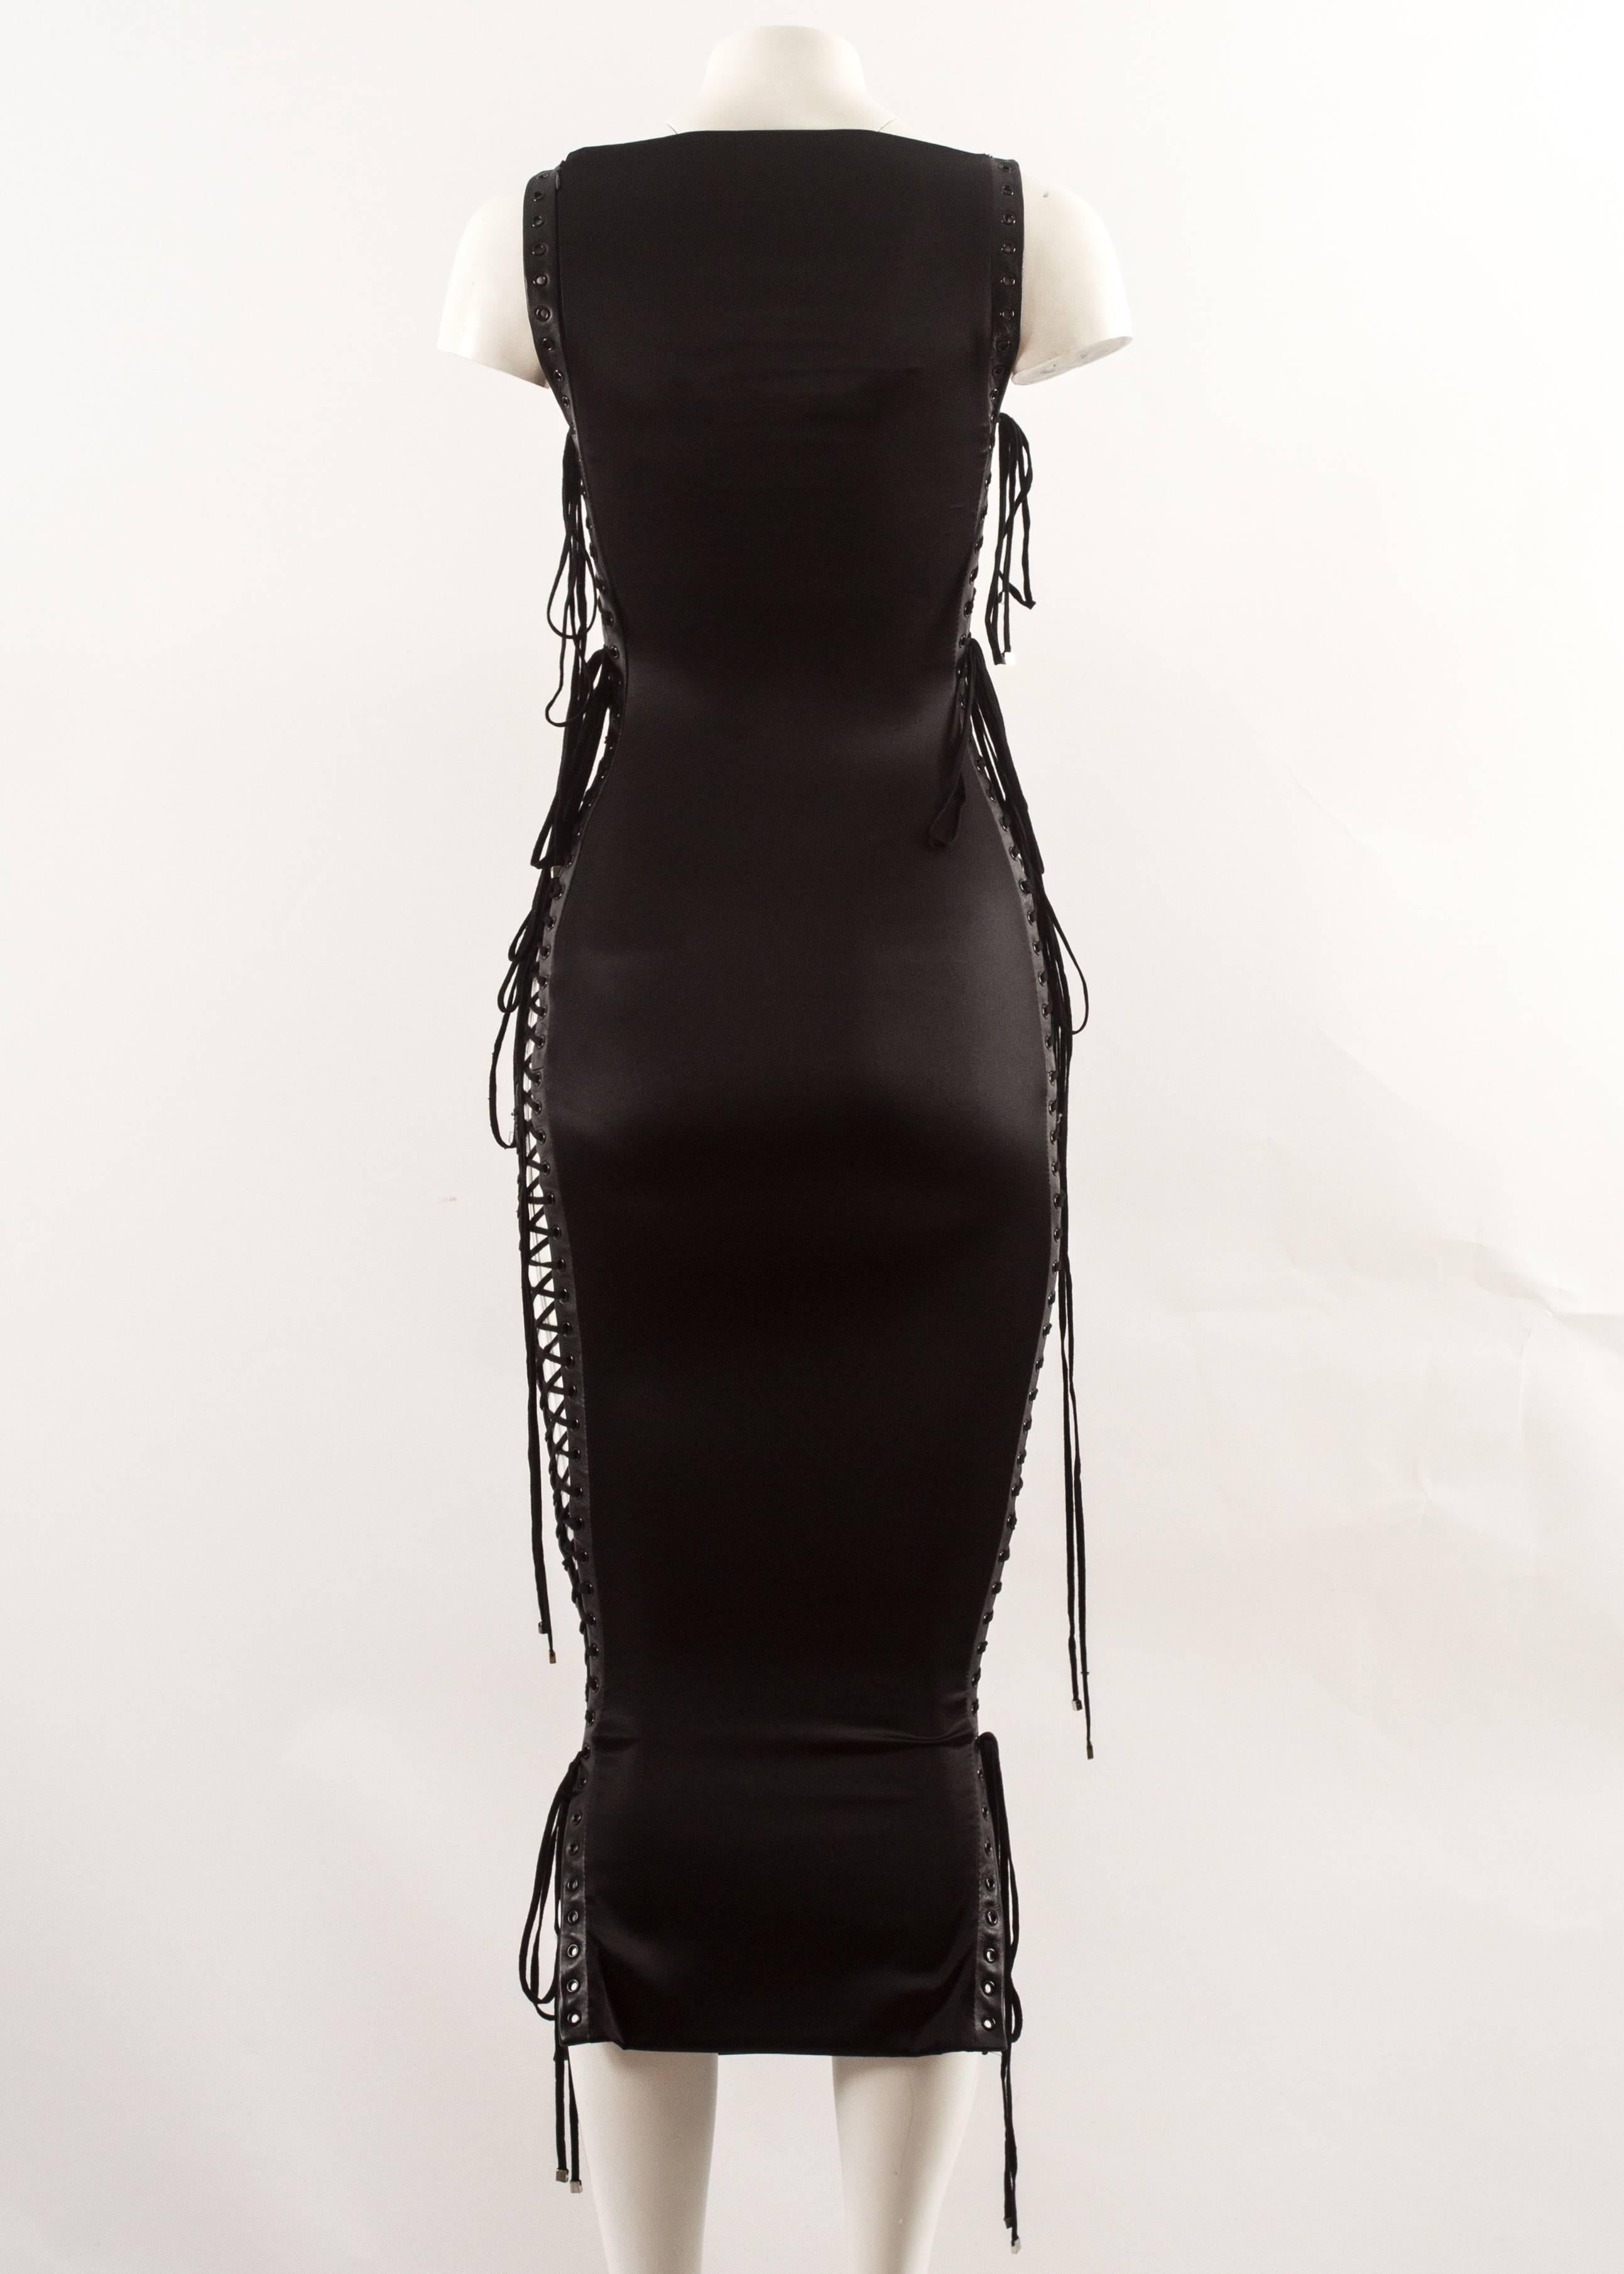 Dolce & Gabbana Spring-Summer 2003 black silk spandex lace up evening dress  1